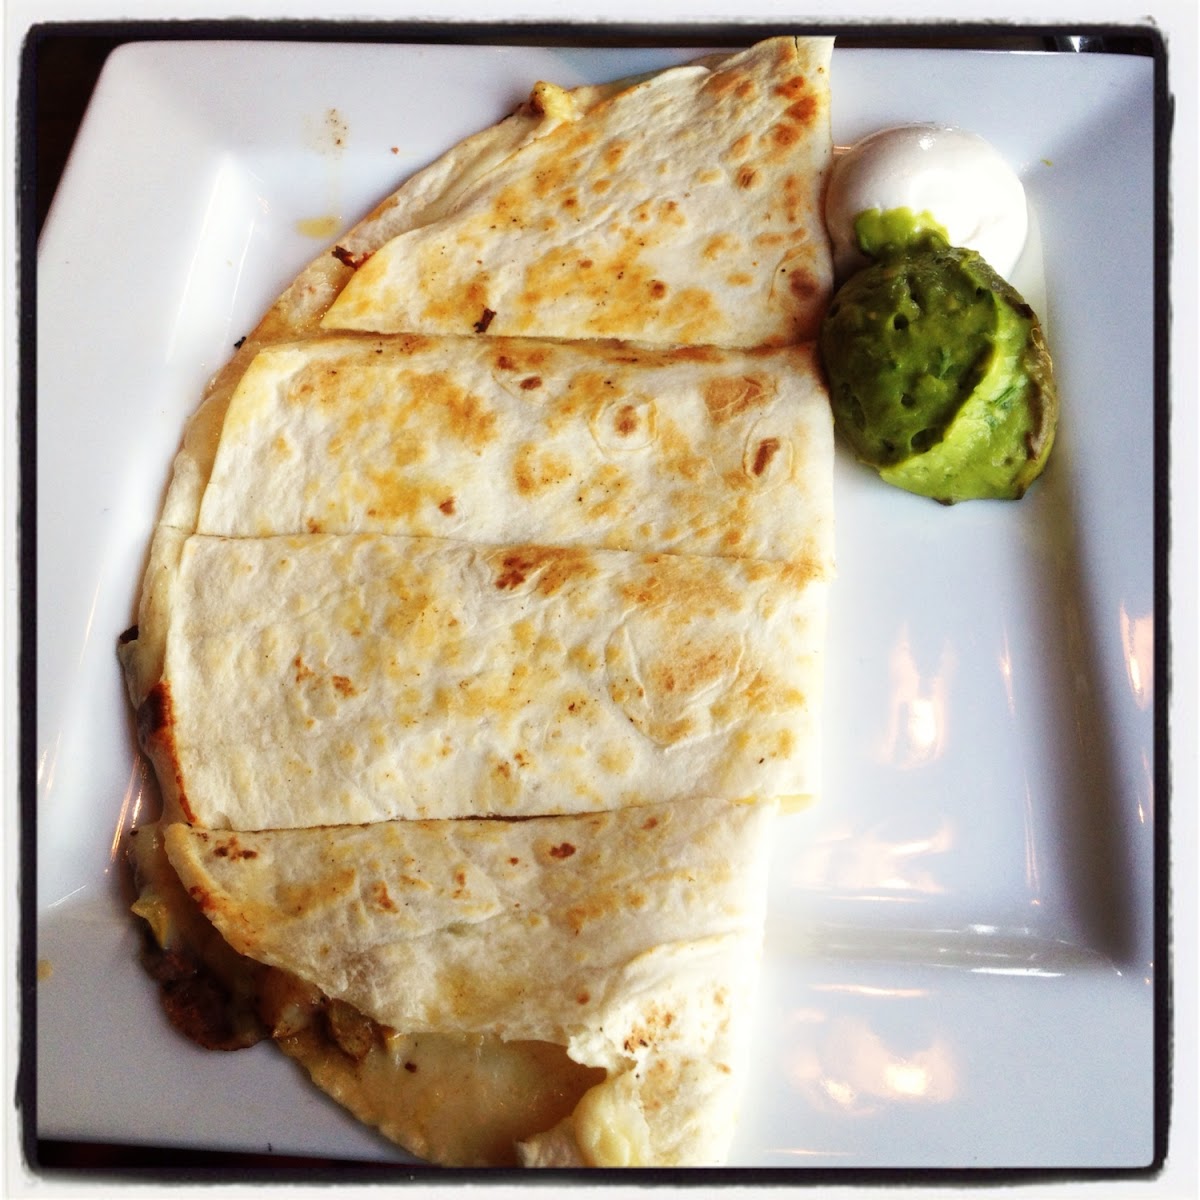 In-edible GF cheese quesadilla with half browned guacamole :(